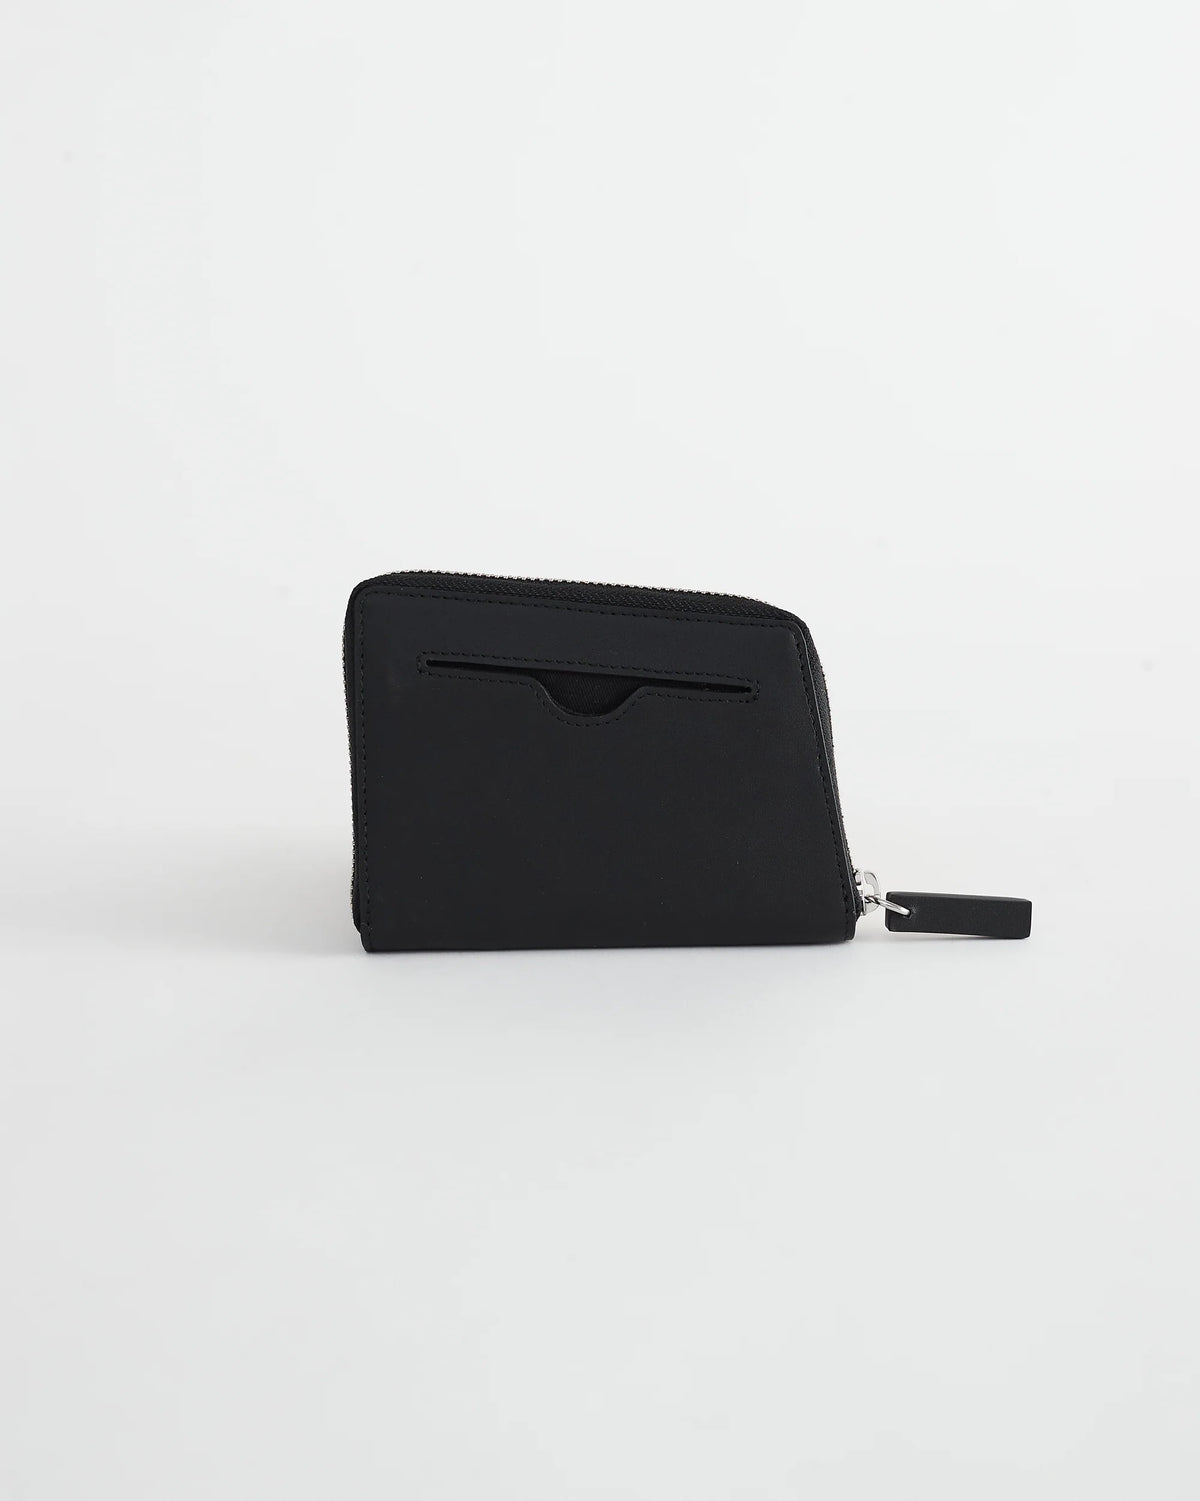 The Bo Concept Wallet -Black